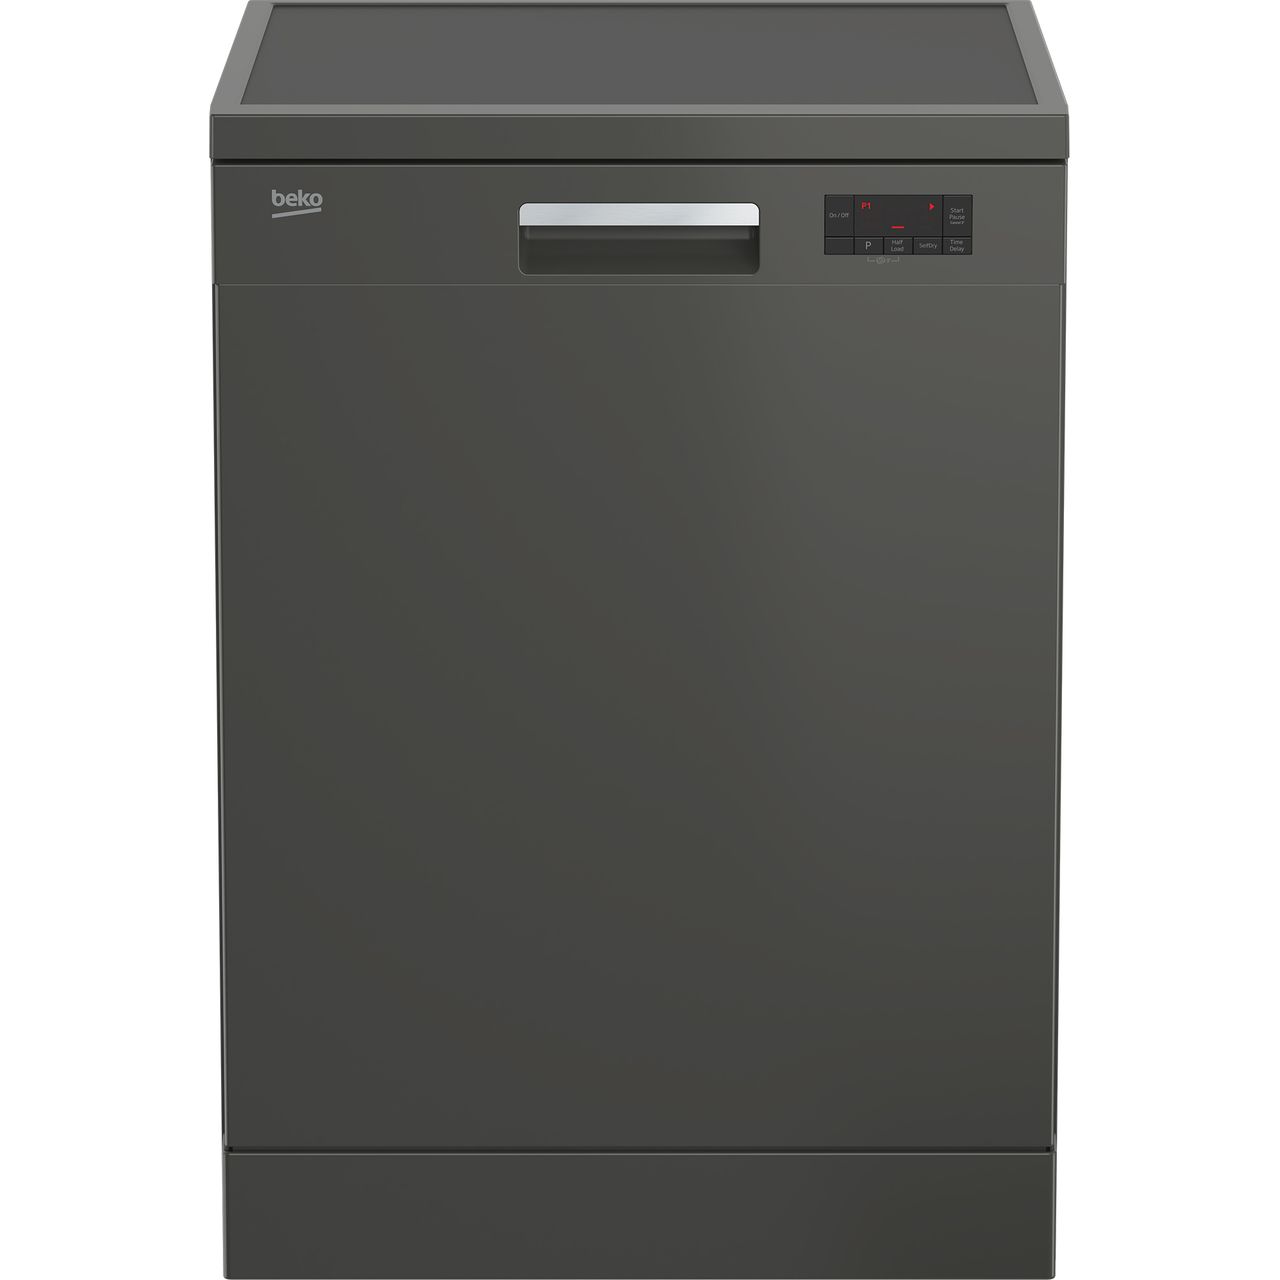 Beko DFN16430G Standard Dishwasher Review